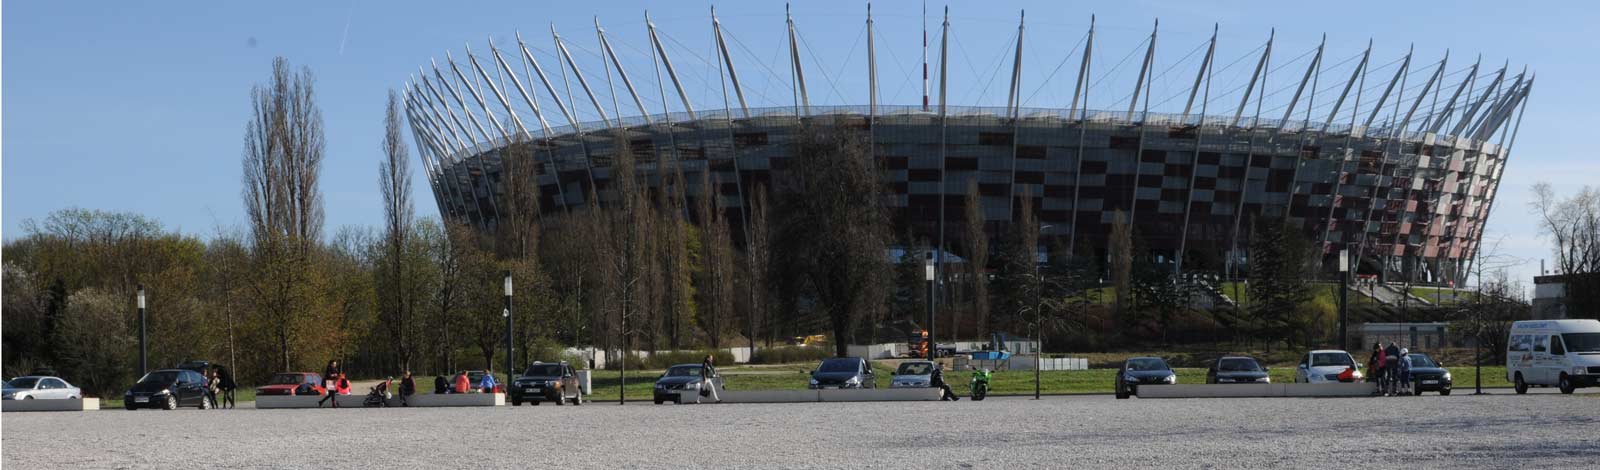 National Stadium Warsaw Poland TOP TRAVEL Coaches Backr